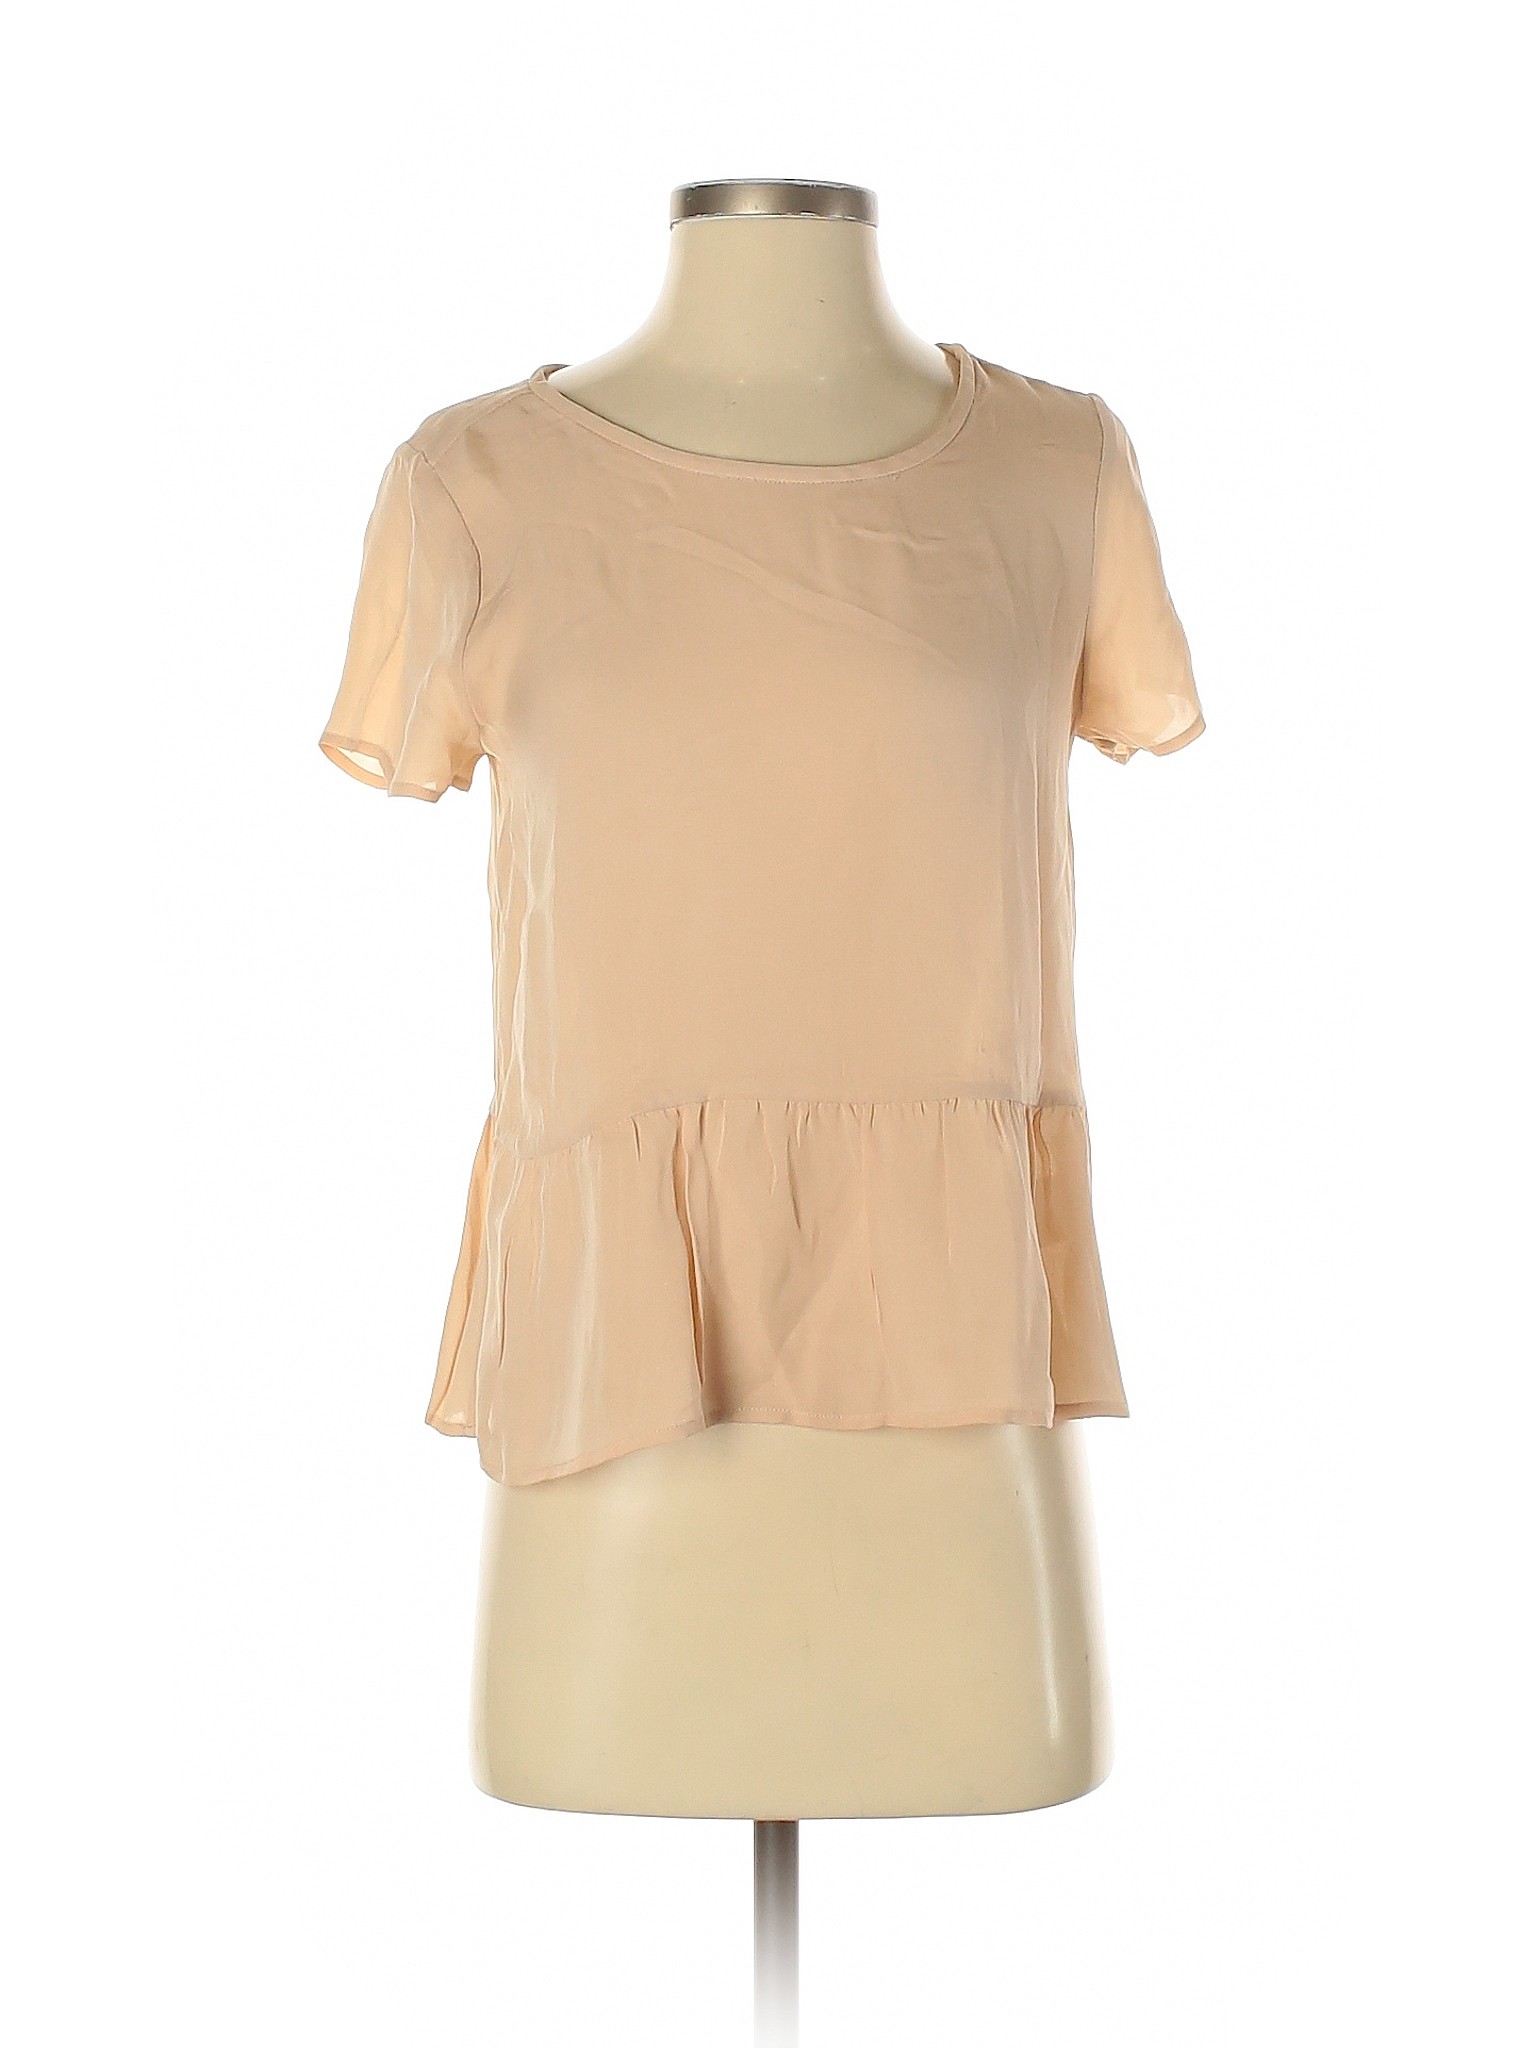 Joie Women Brown Short Sleeve Silk Top XS | eBay